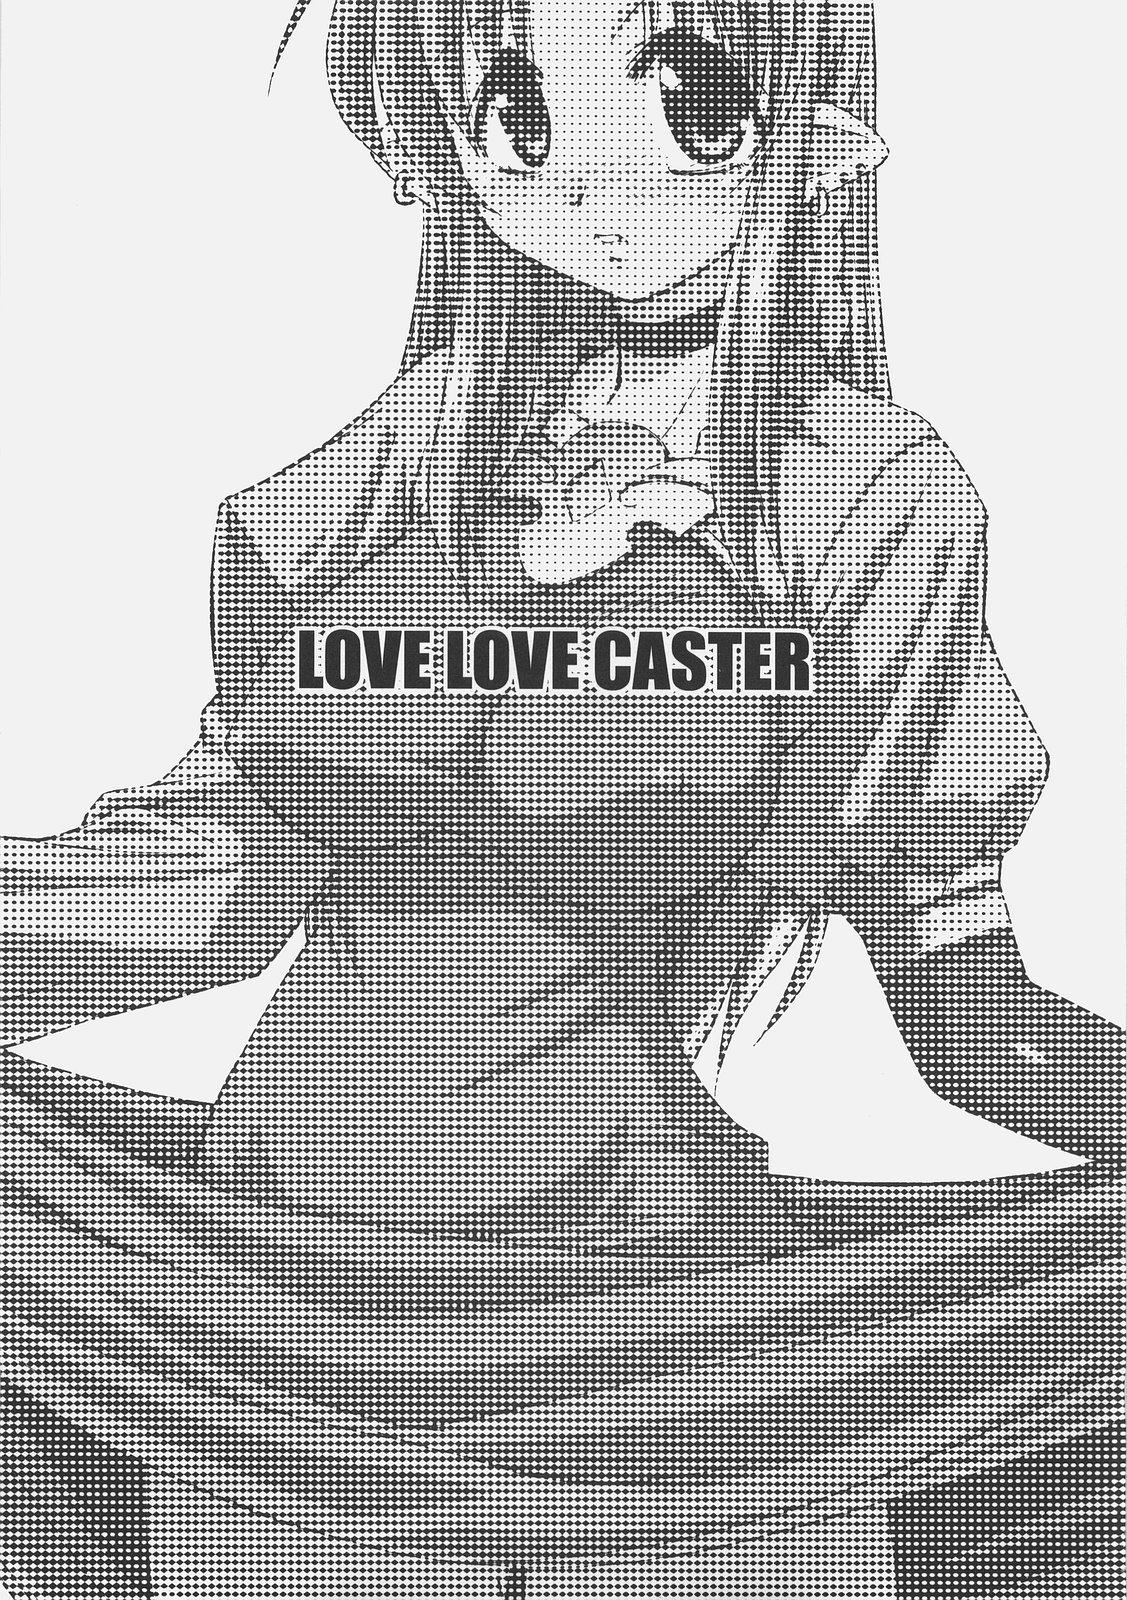 LOVE LOVE CASTER 1